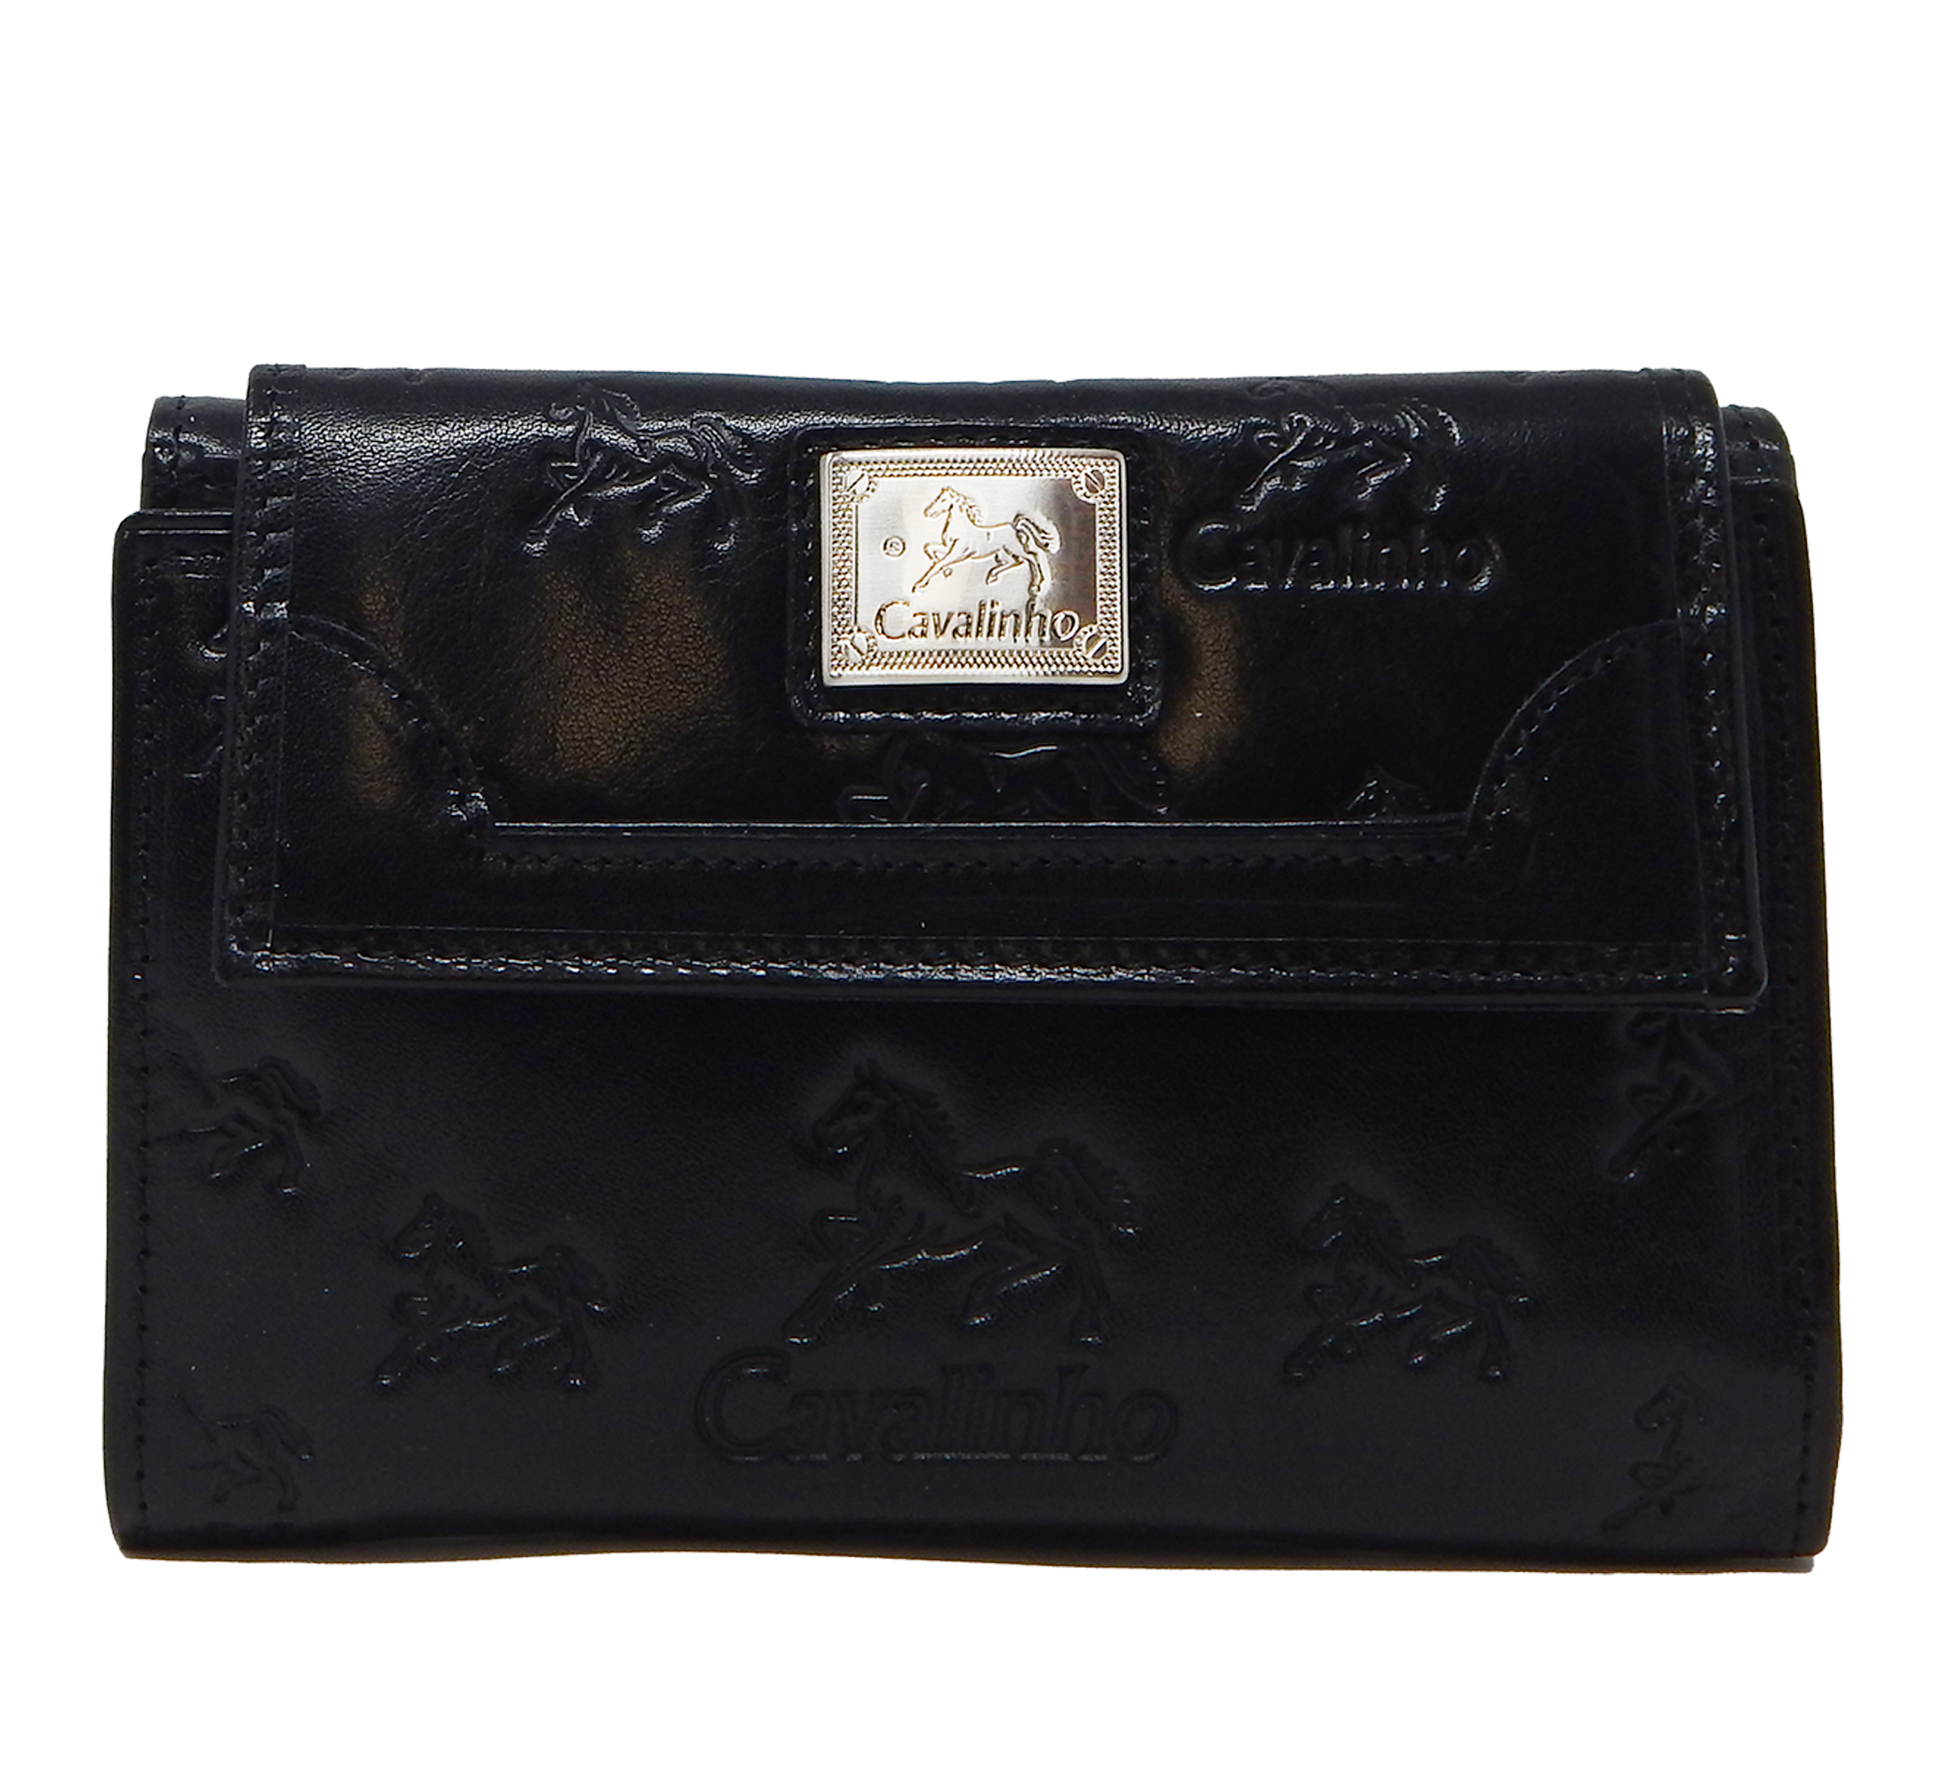 Cavalinho Signature Wallet - Black - 28090202_01